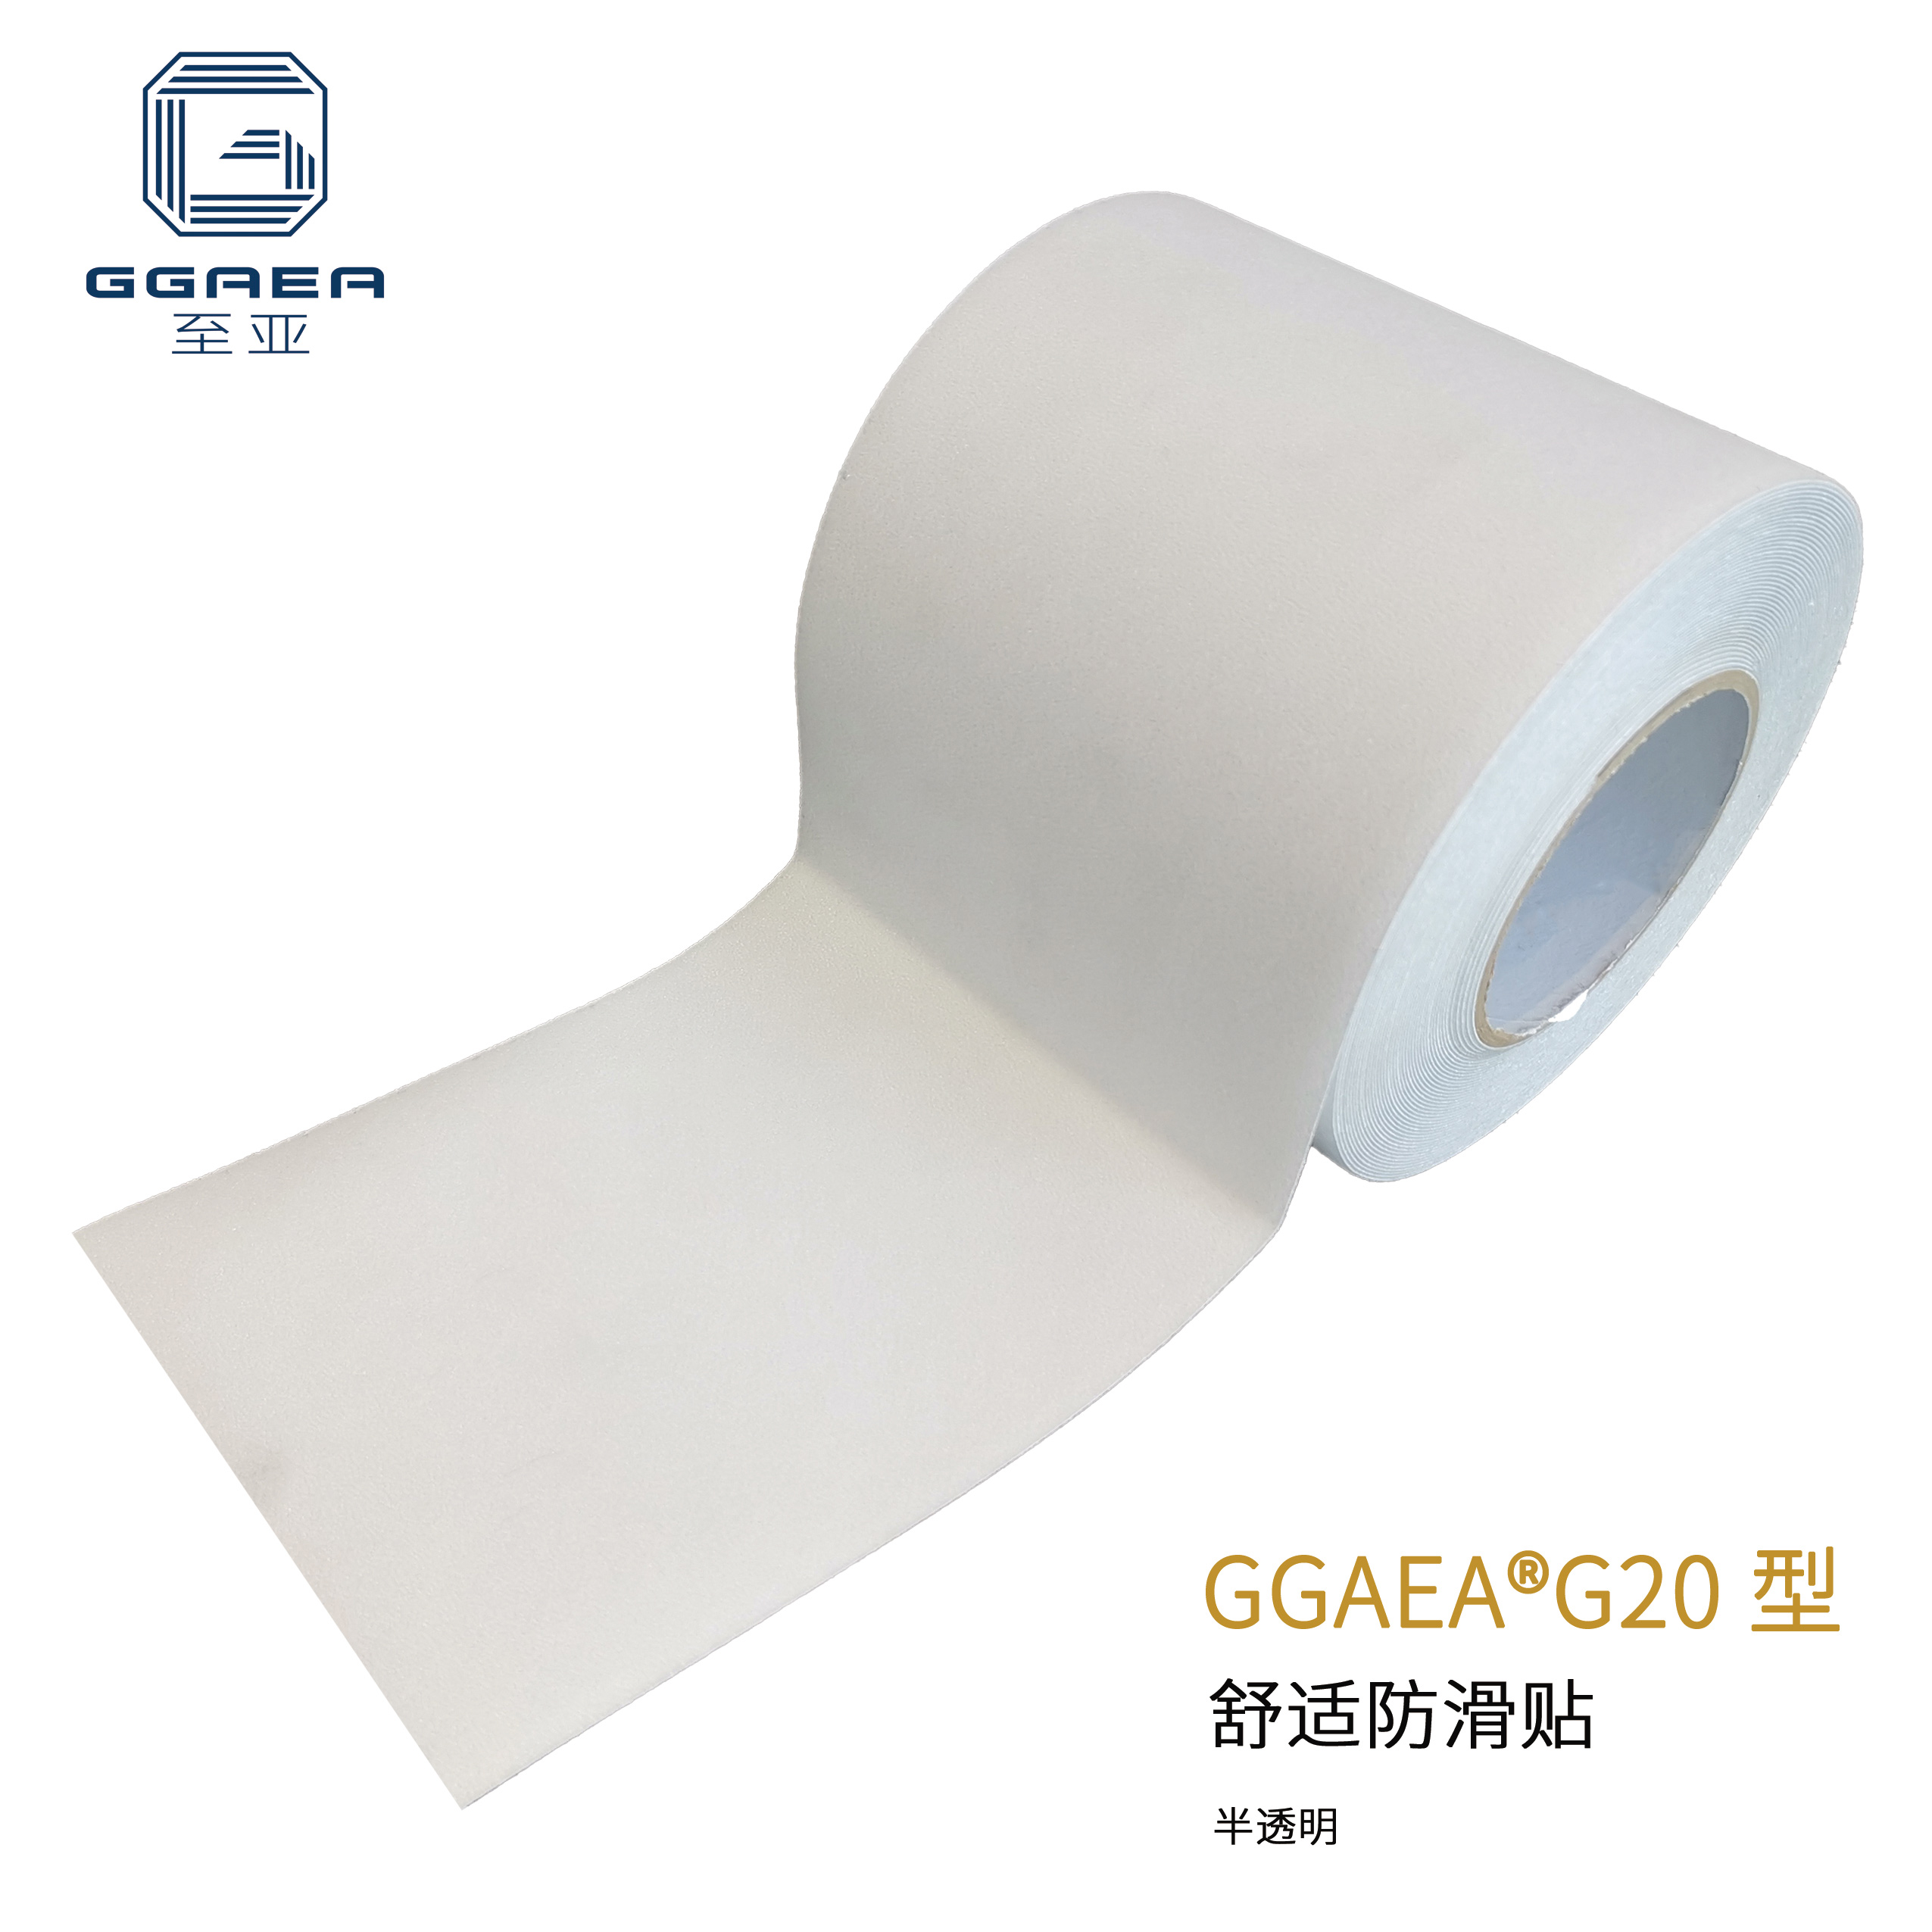 GGAEA™ G20 Comfortable Anti-Slip Tape and Threads